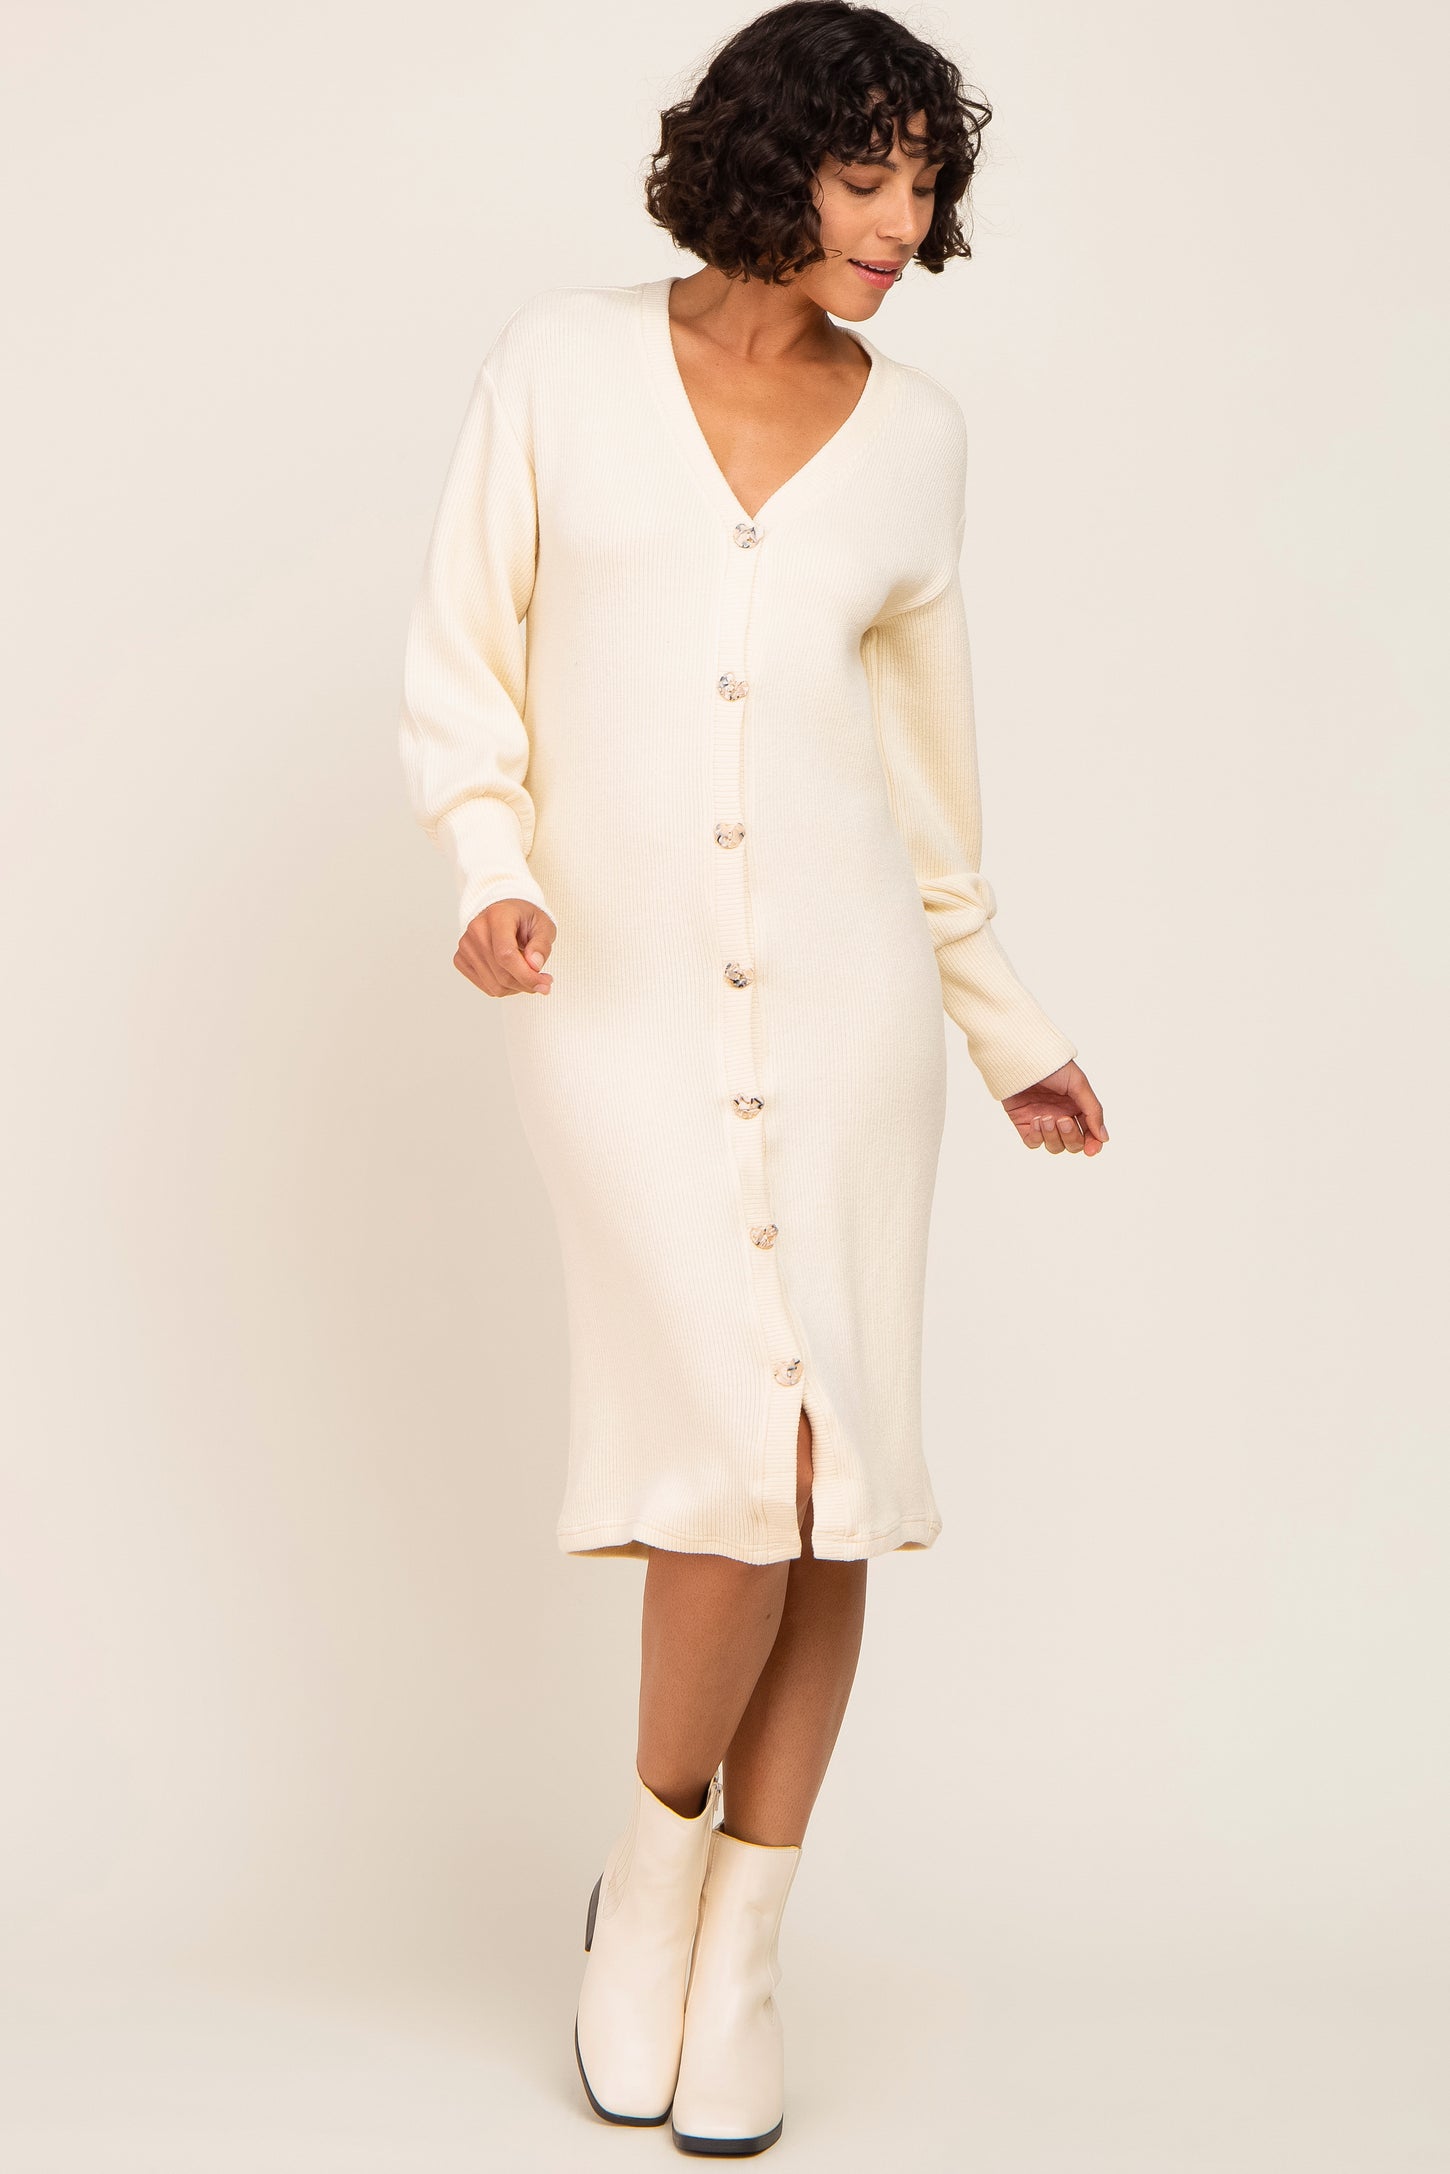 Cream Long Button Down Maternity Cardigan/Dress